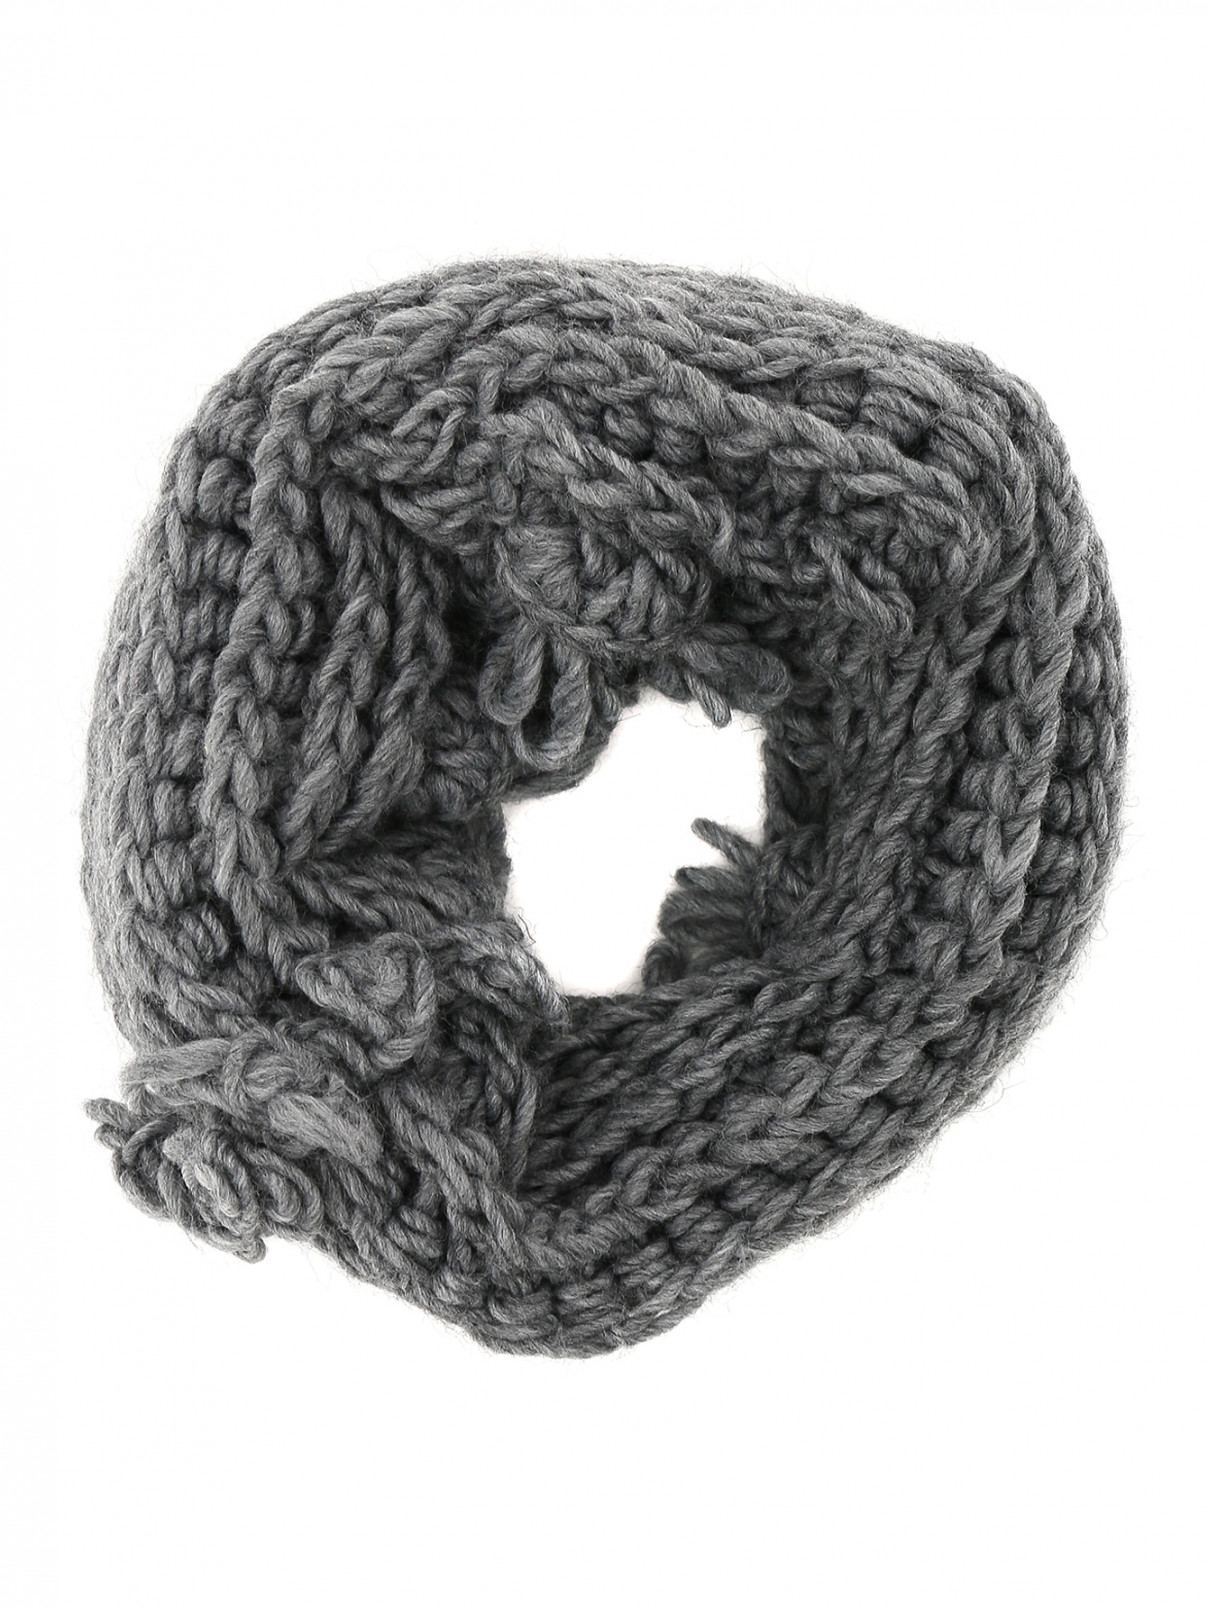 Шарф-снуд из шерсти Maximo  –  Общий вид  – Цвет:  Серый